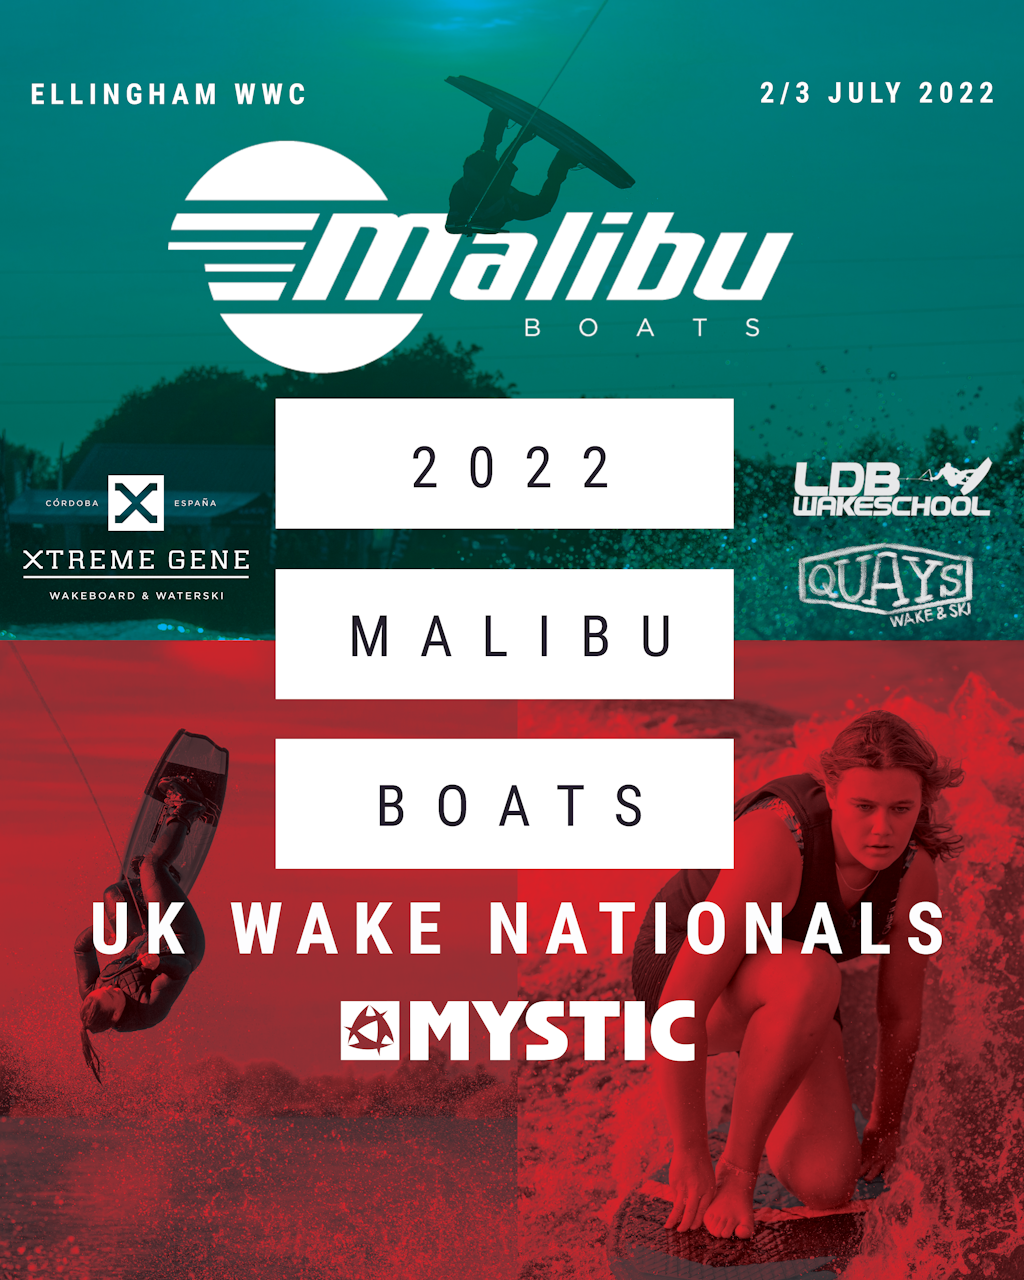 Ellingham WWC host the 2022 Malibu Boats UK Wakeboard and Wakesurf Nationals 